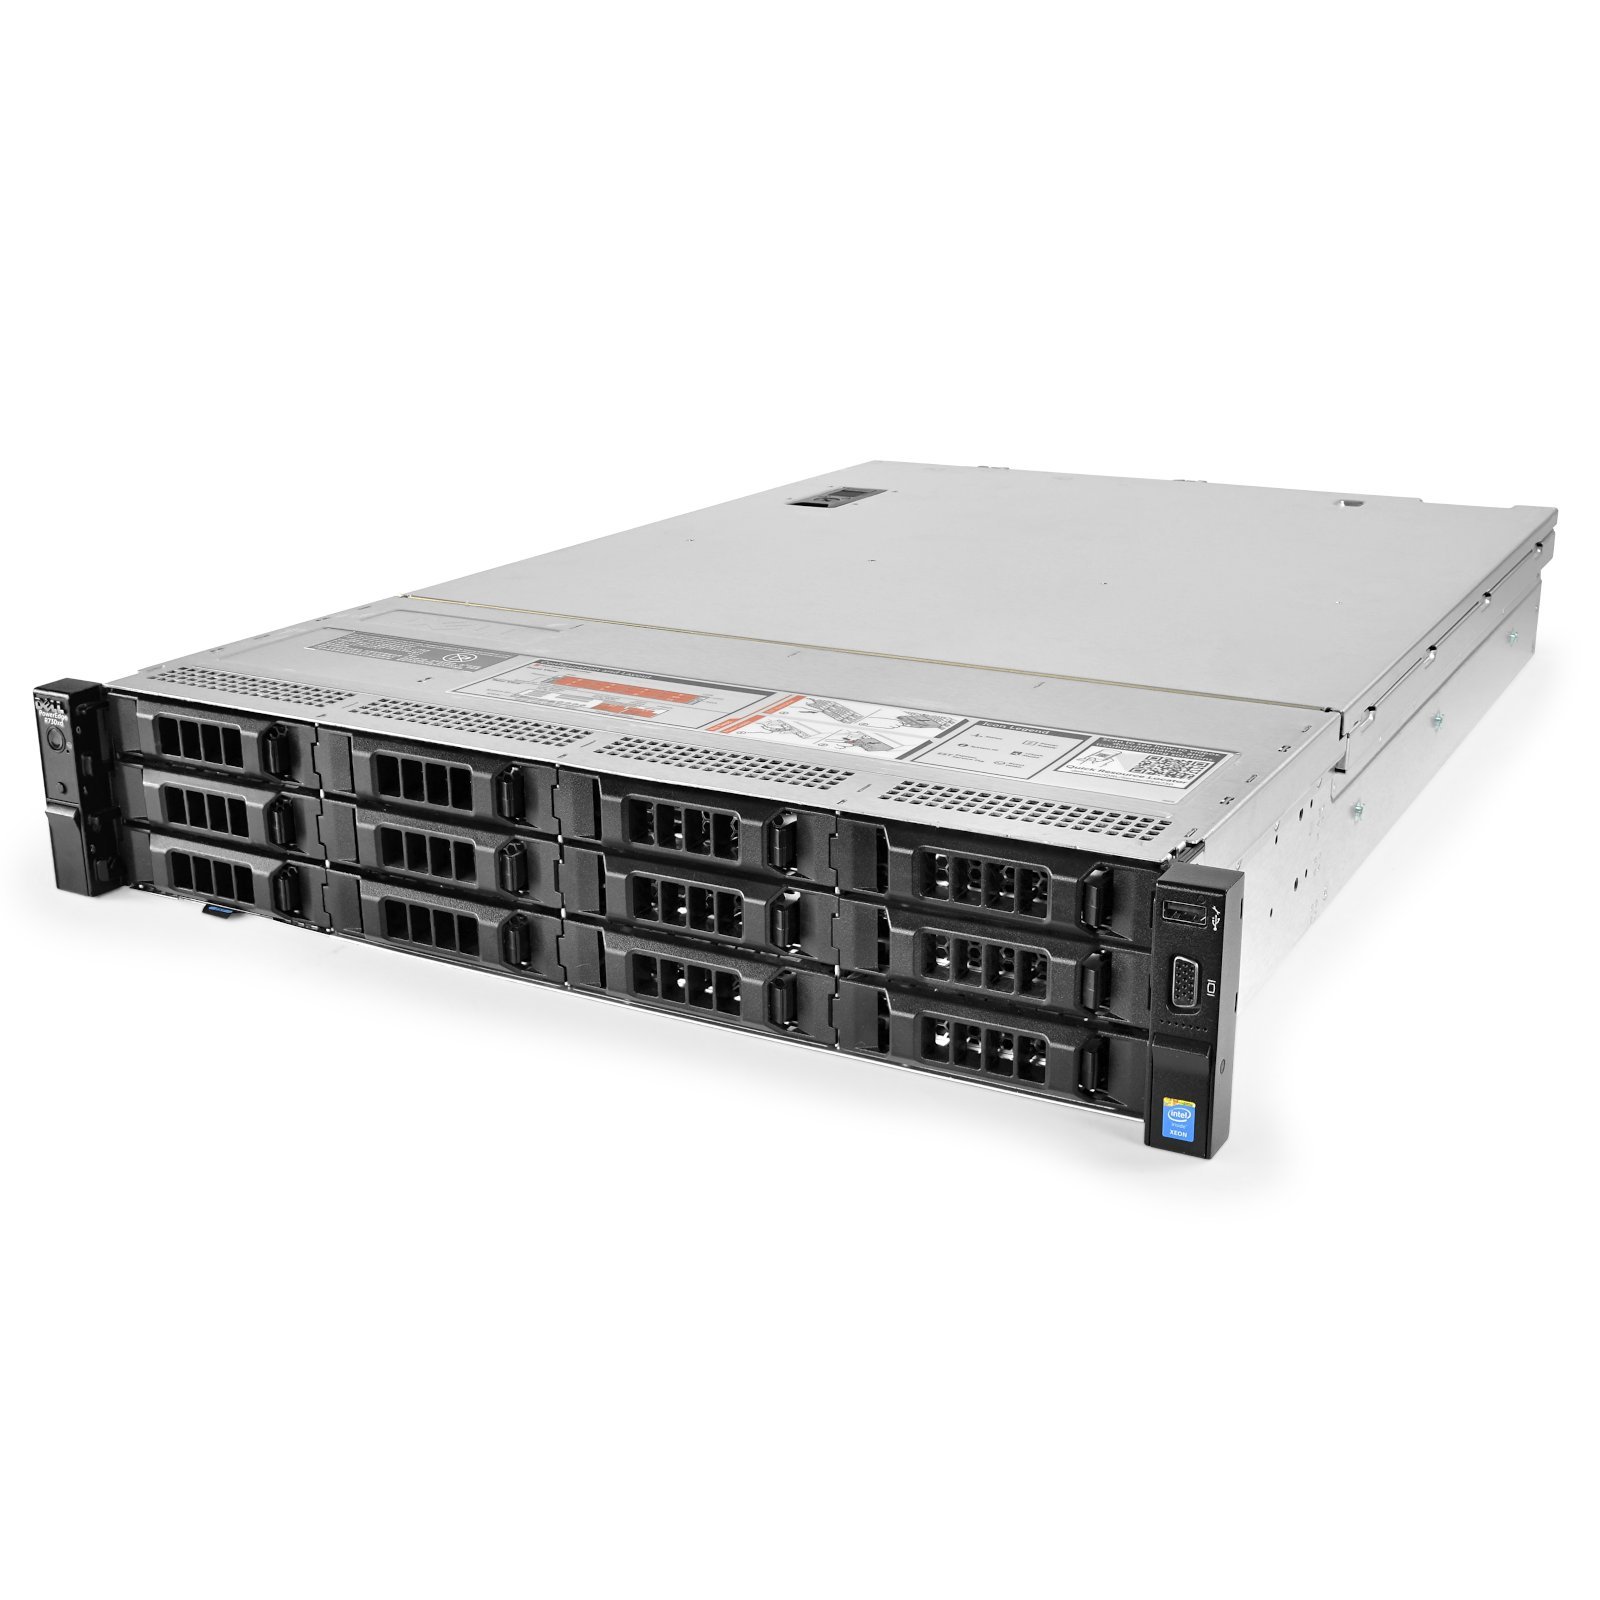 Подробное фото Сервер DELL PowerEdge R730XD 2x Xeon E5-2650v4 128Gb 2133P DDR4 12x noHDD 3.5" SAS RAID Perc H730 mini, 1024Mb, 2*PSU 750W